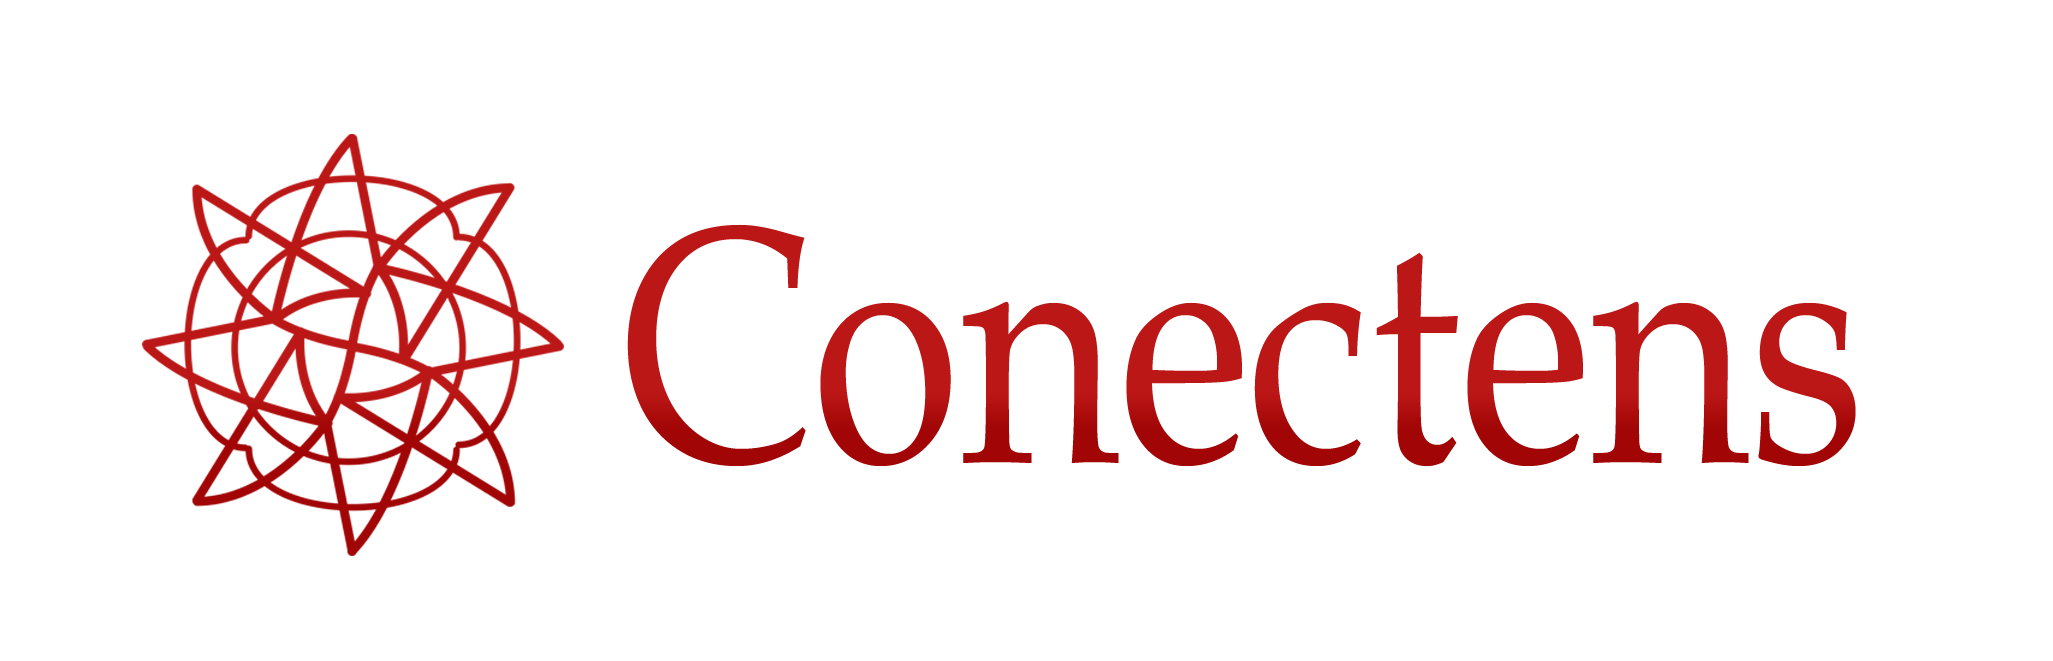 Conectens